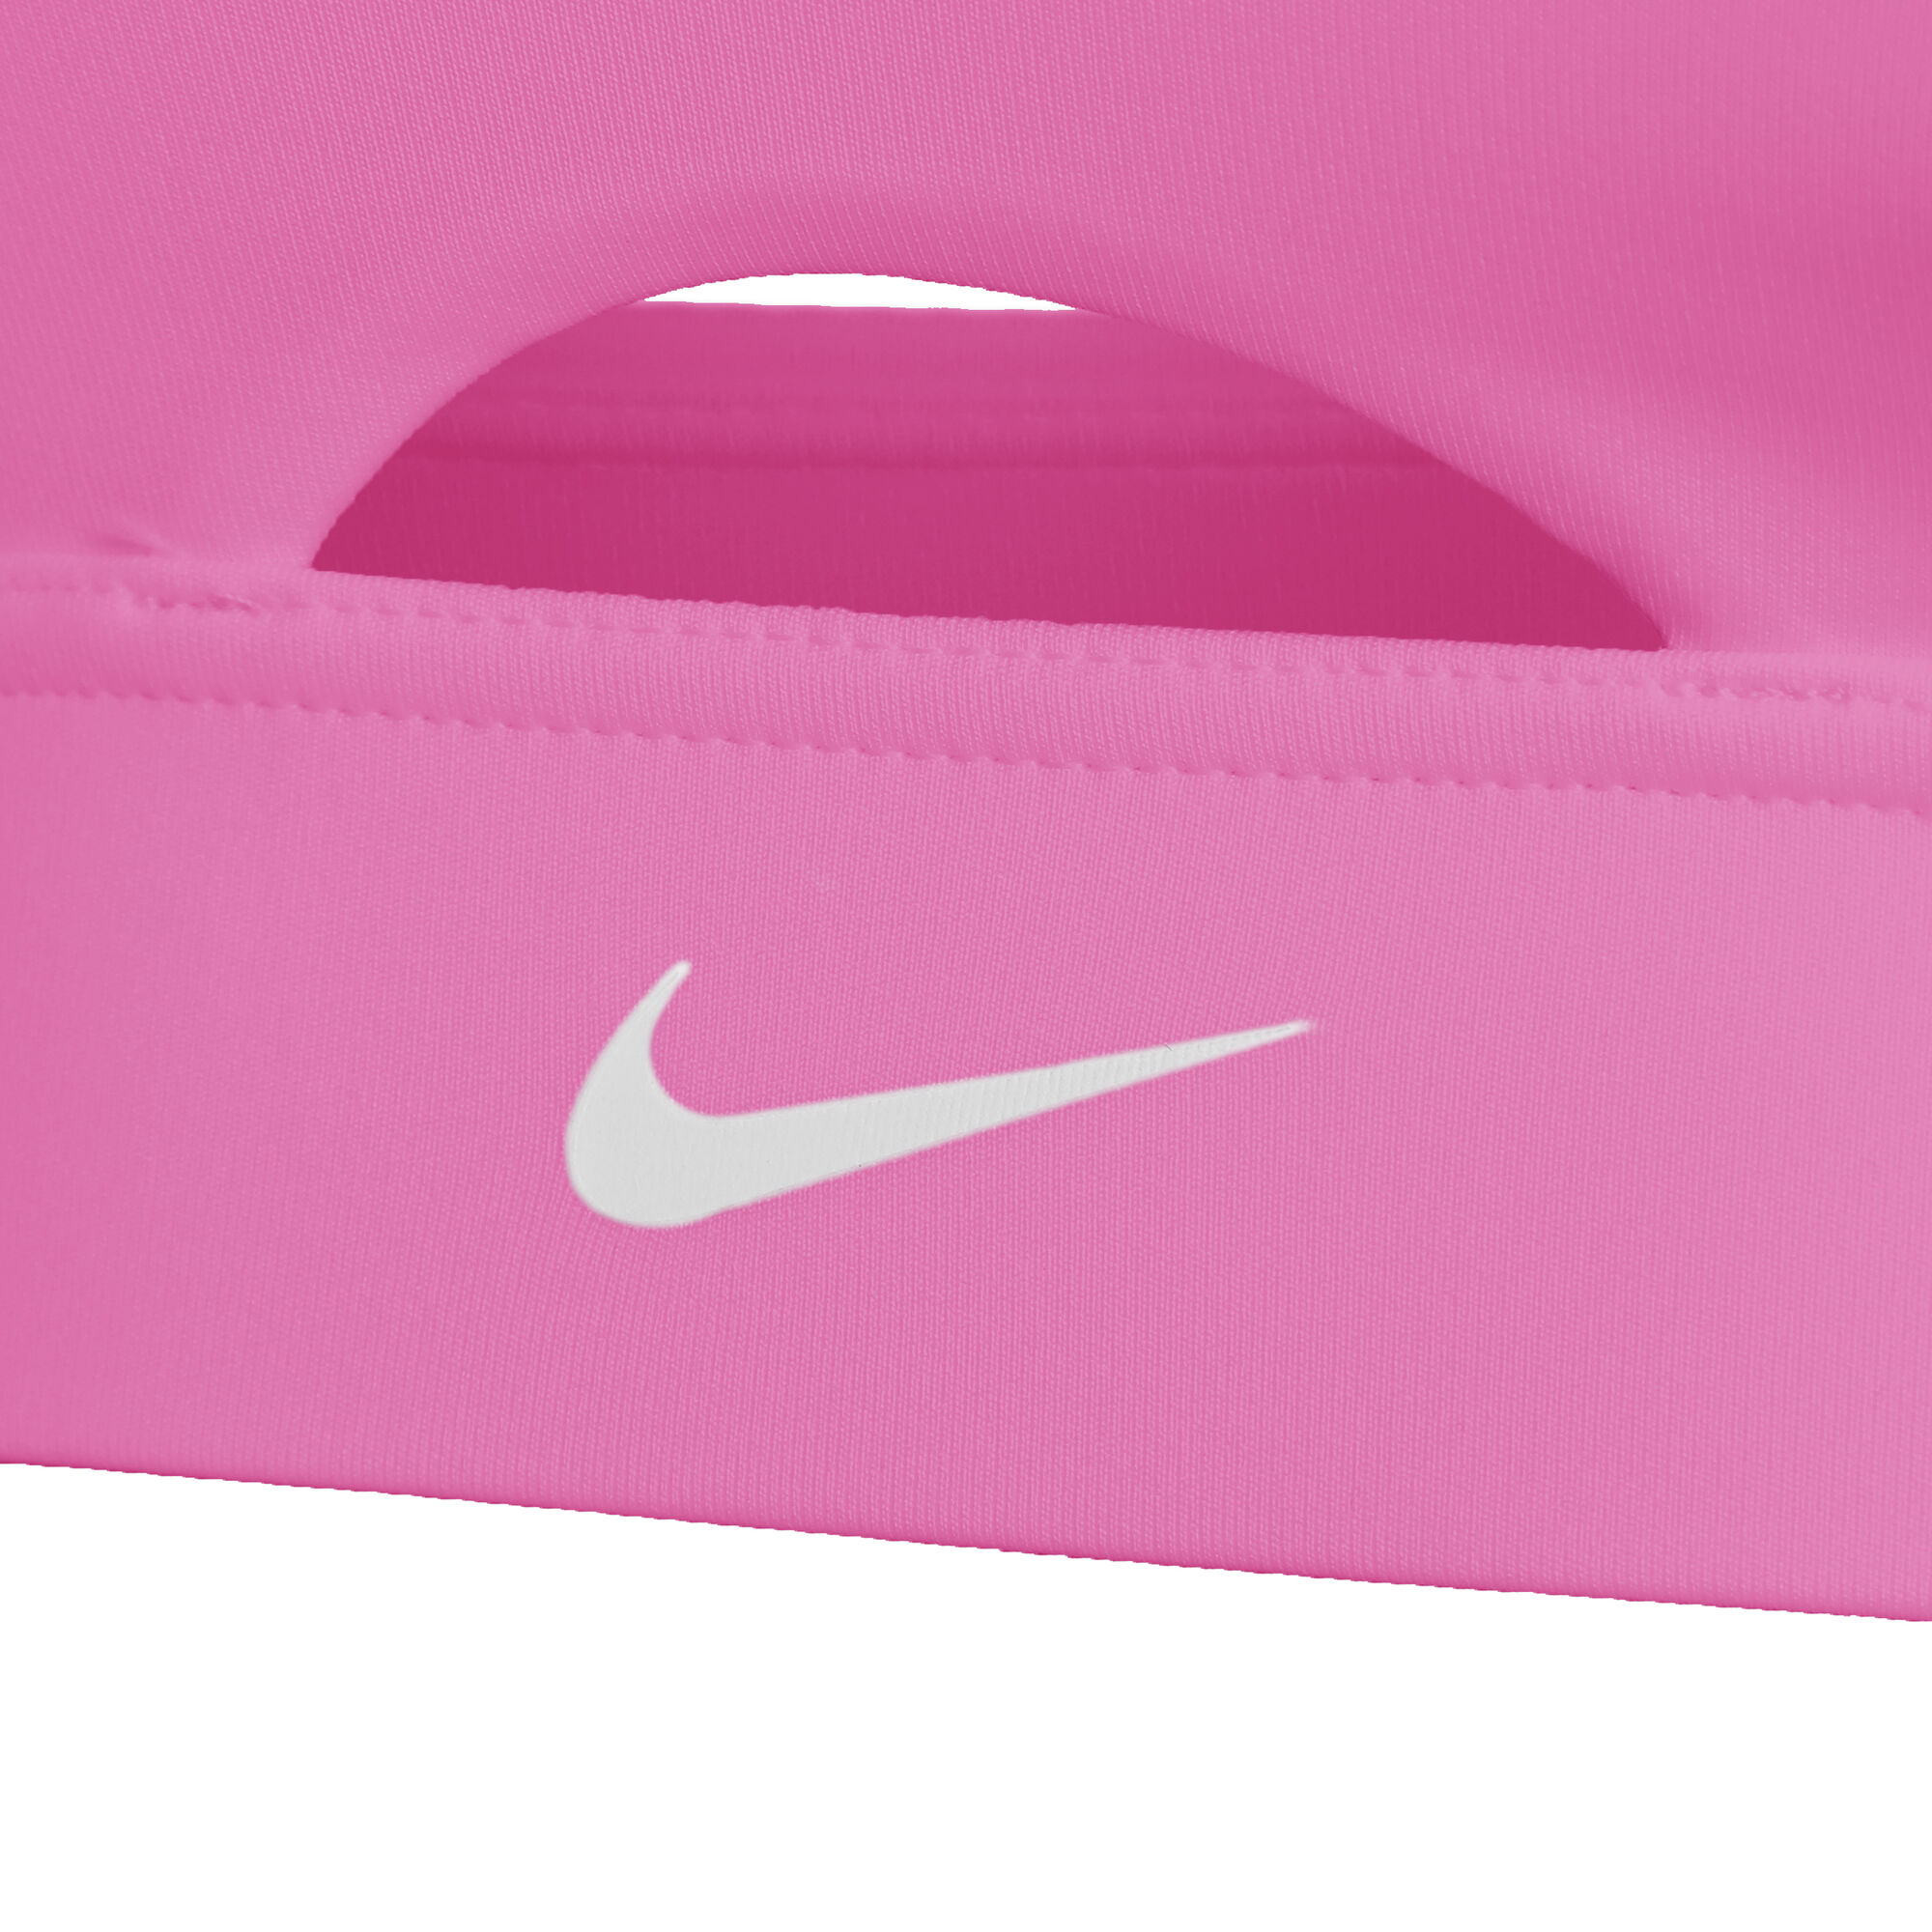 Buy Nike Dri-Fit Indy Plunge Cutout Sports Bras Women Pink online